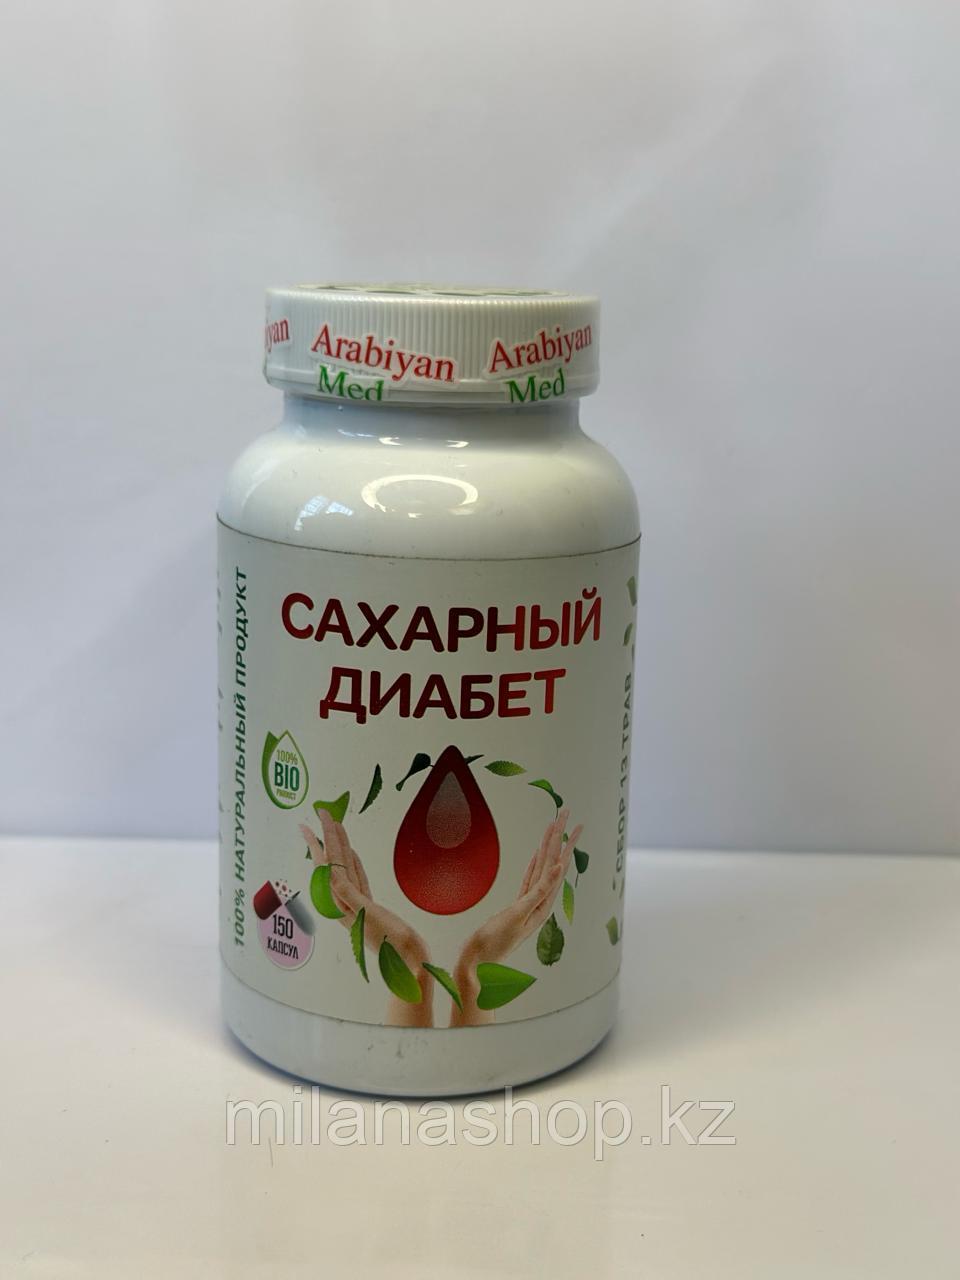 Arabiyan Med - Сахарный диабет 150 капсул